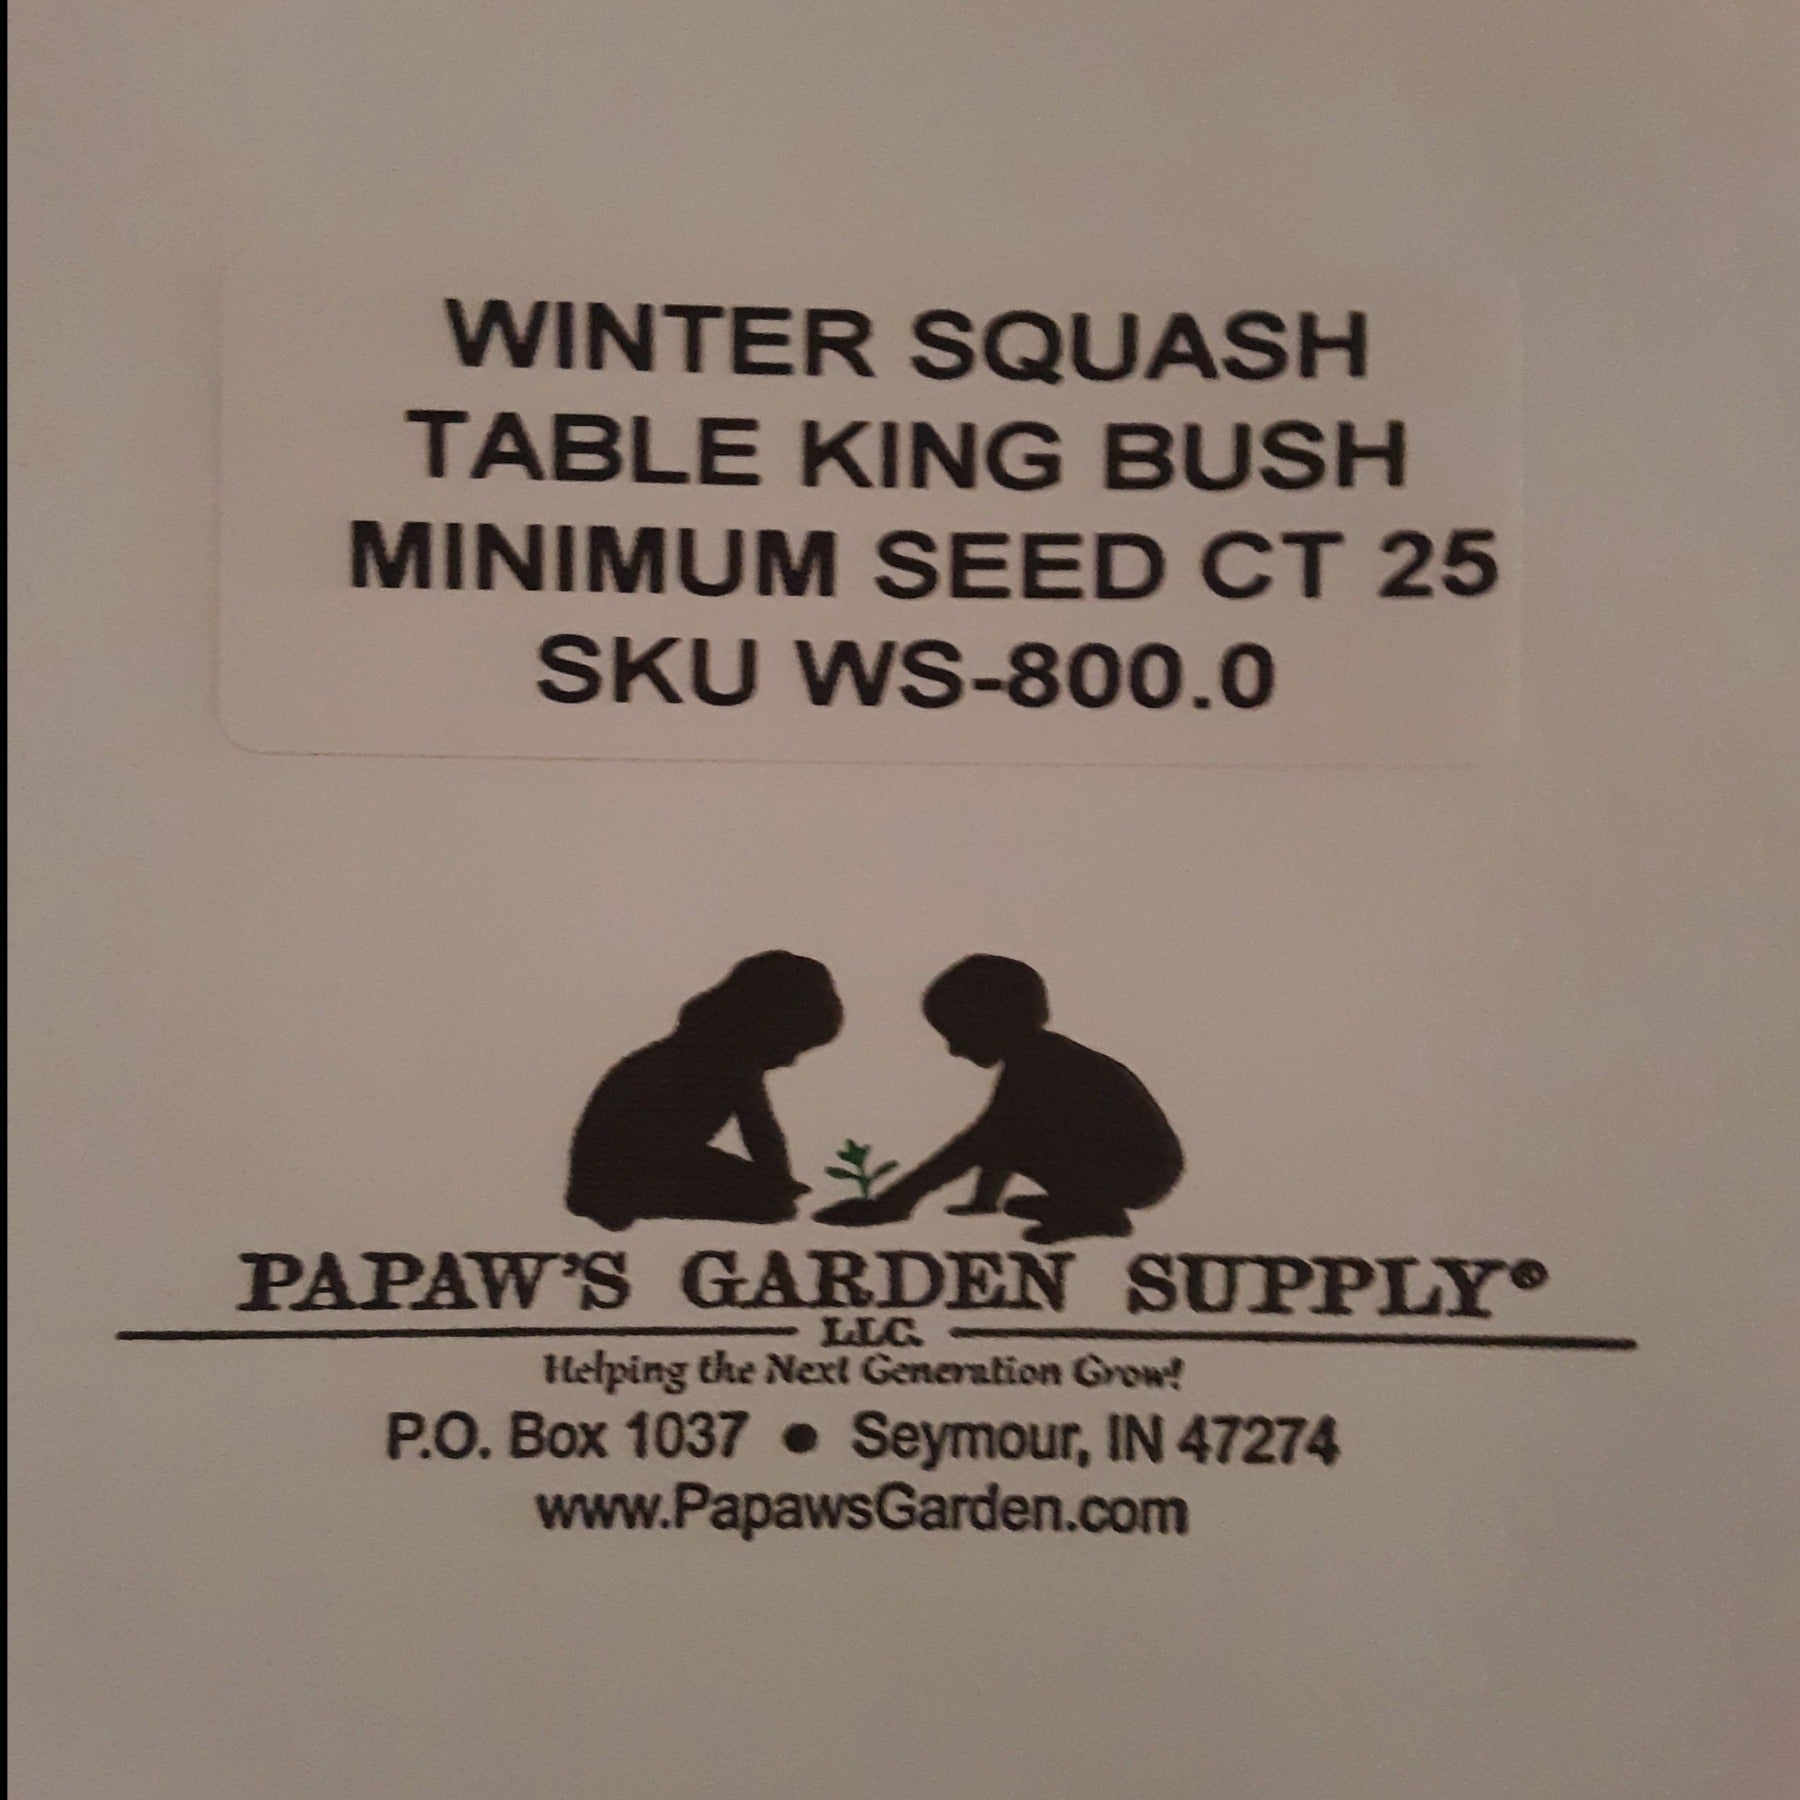 Table King Bush Winter Squash Seeds